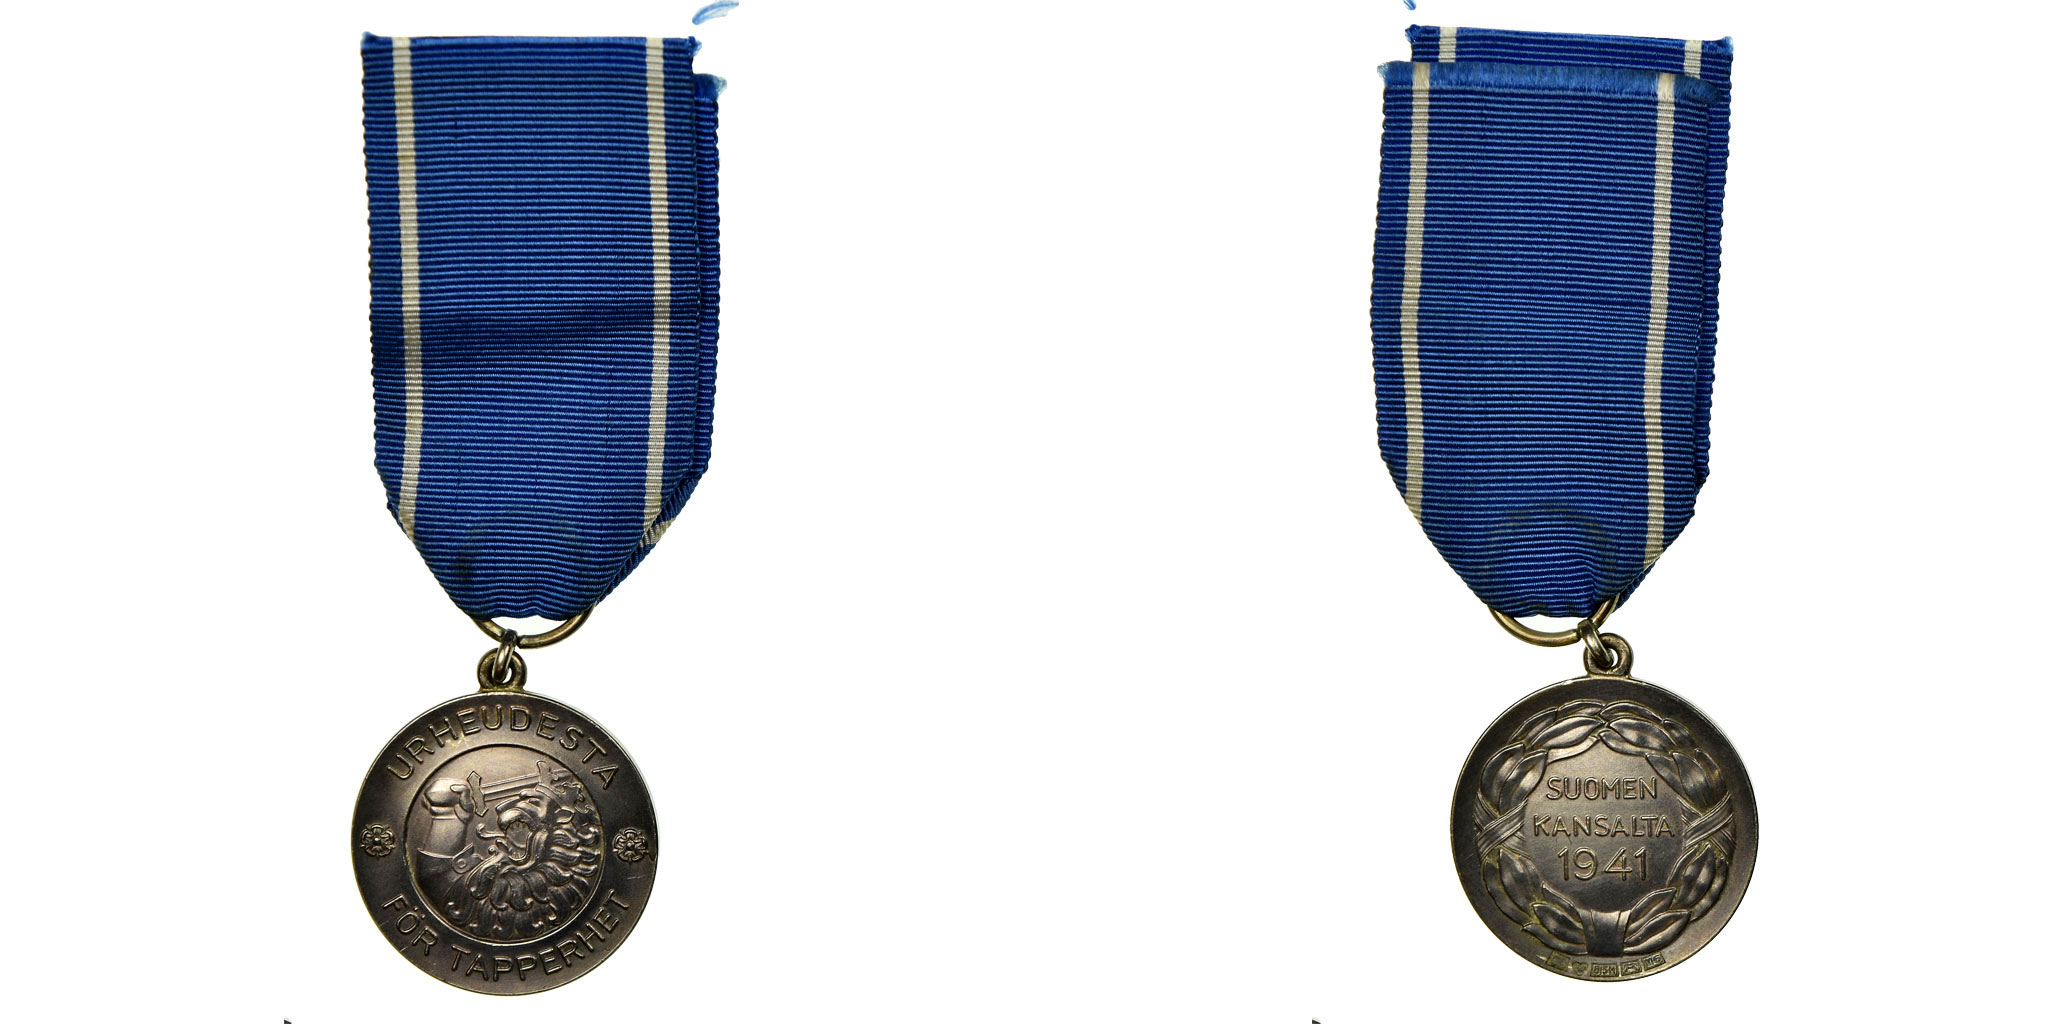 Finland, Bravoure, Suomen Kansalta, Medal, 1941, Excellent Quality, Silver,  30